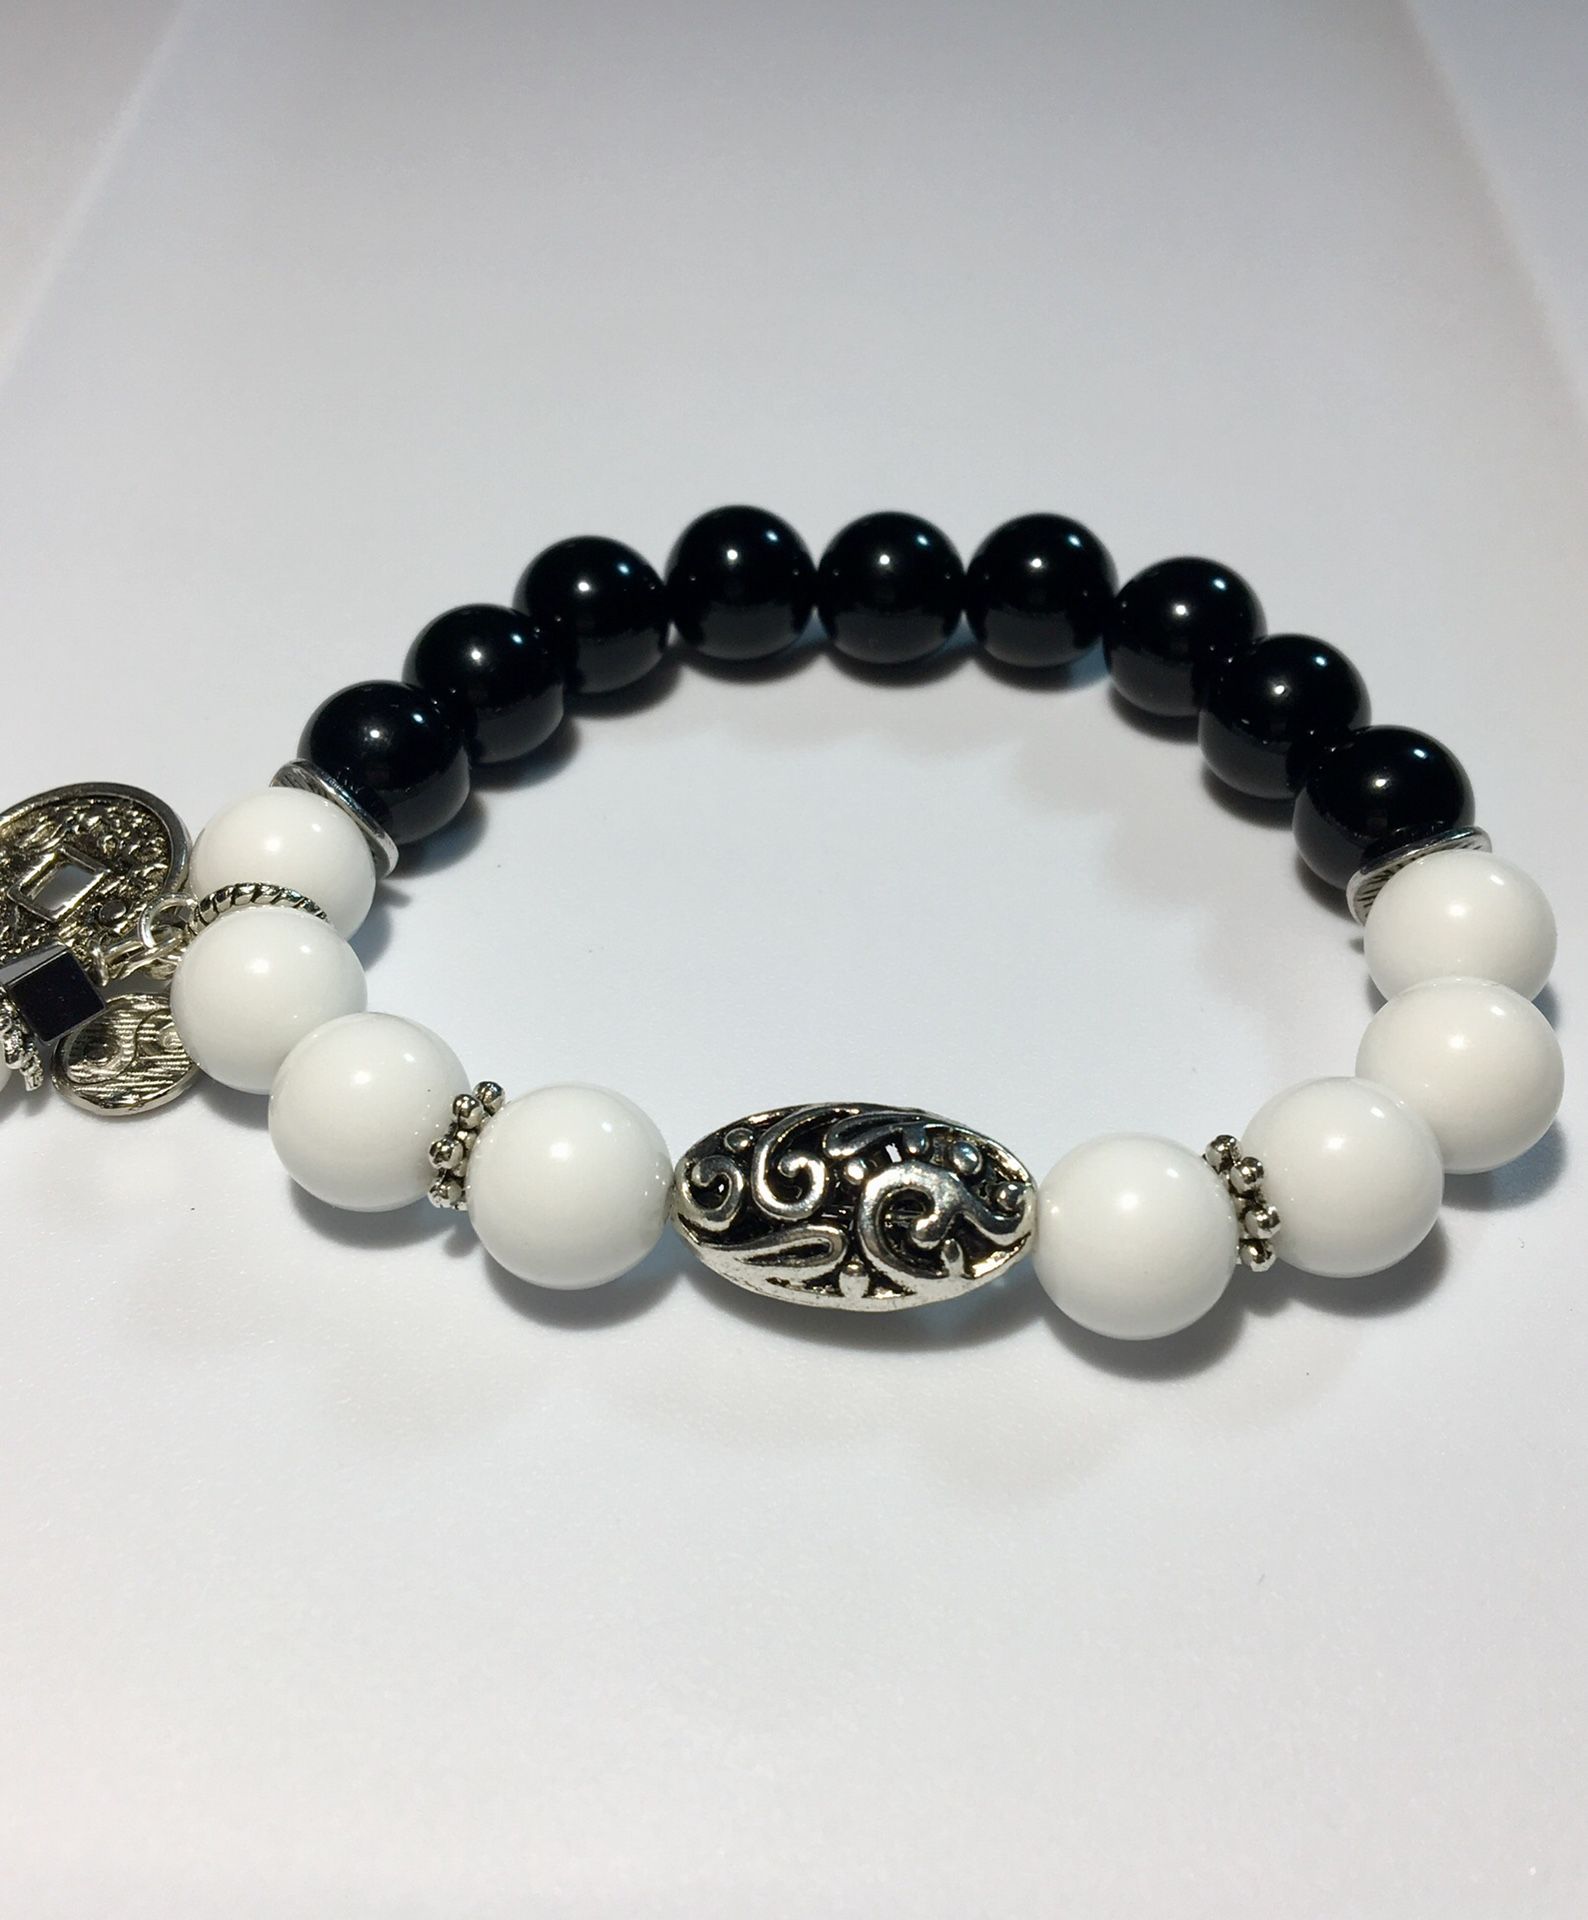 Beautiful handmade black & white onyx bracelet!